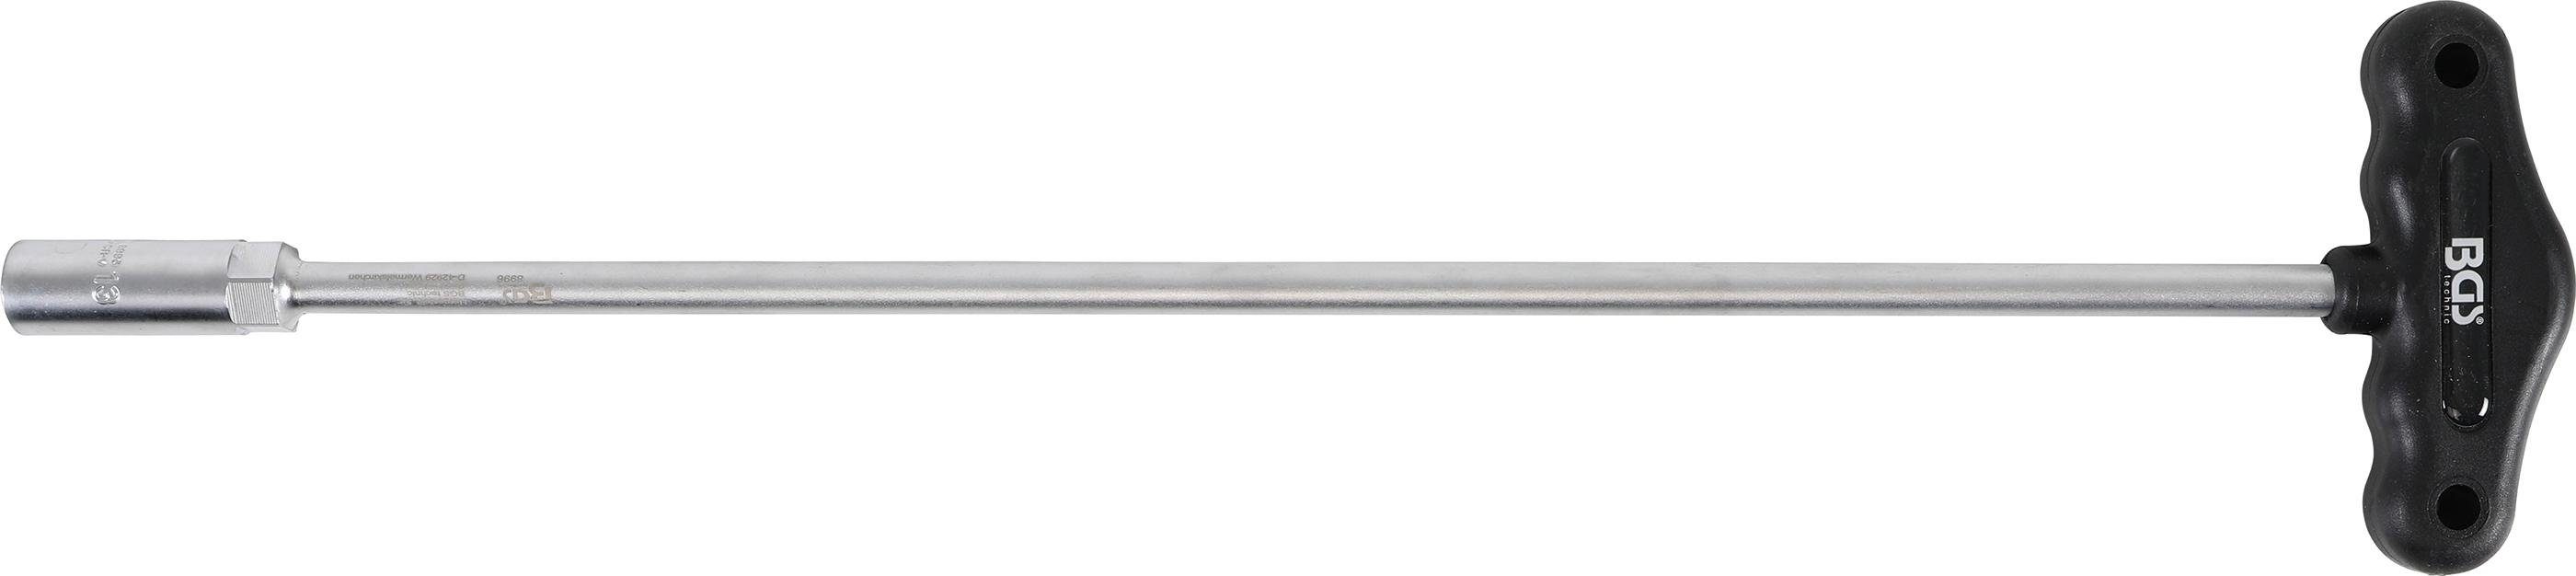 BGS technic Steckschlüssel Steckschlüssel mit T-Griff, Sechskant, Länge 430 mm, SW 13 mm | Steckschlüssel